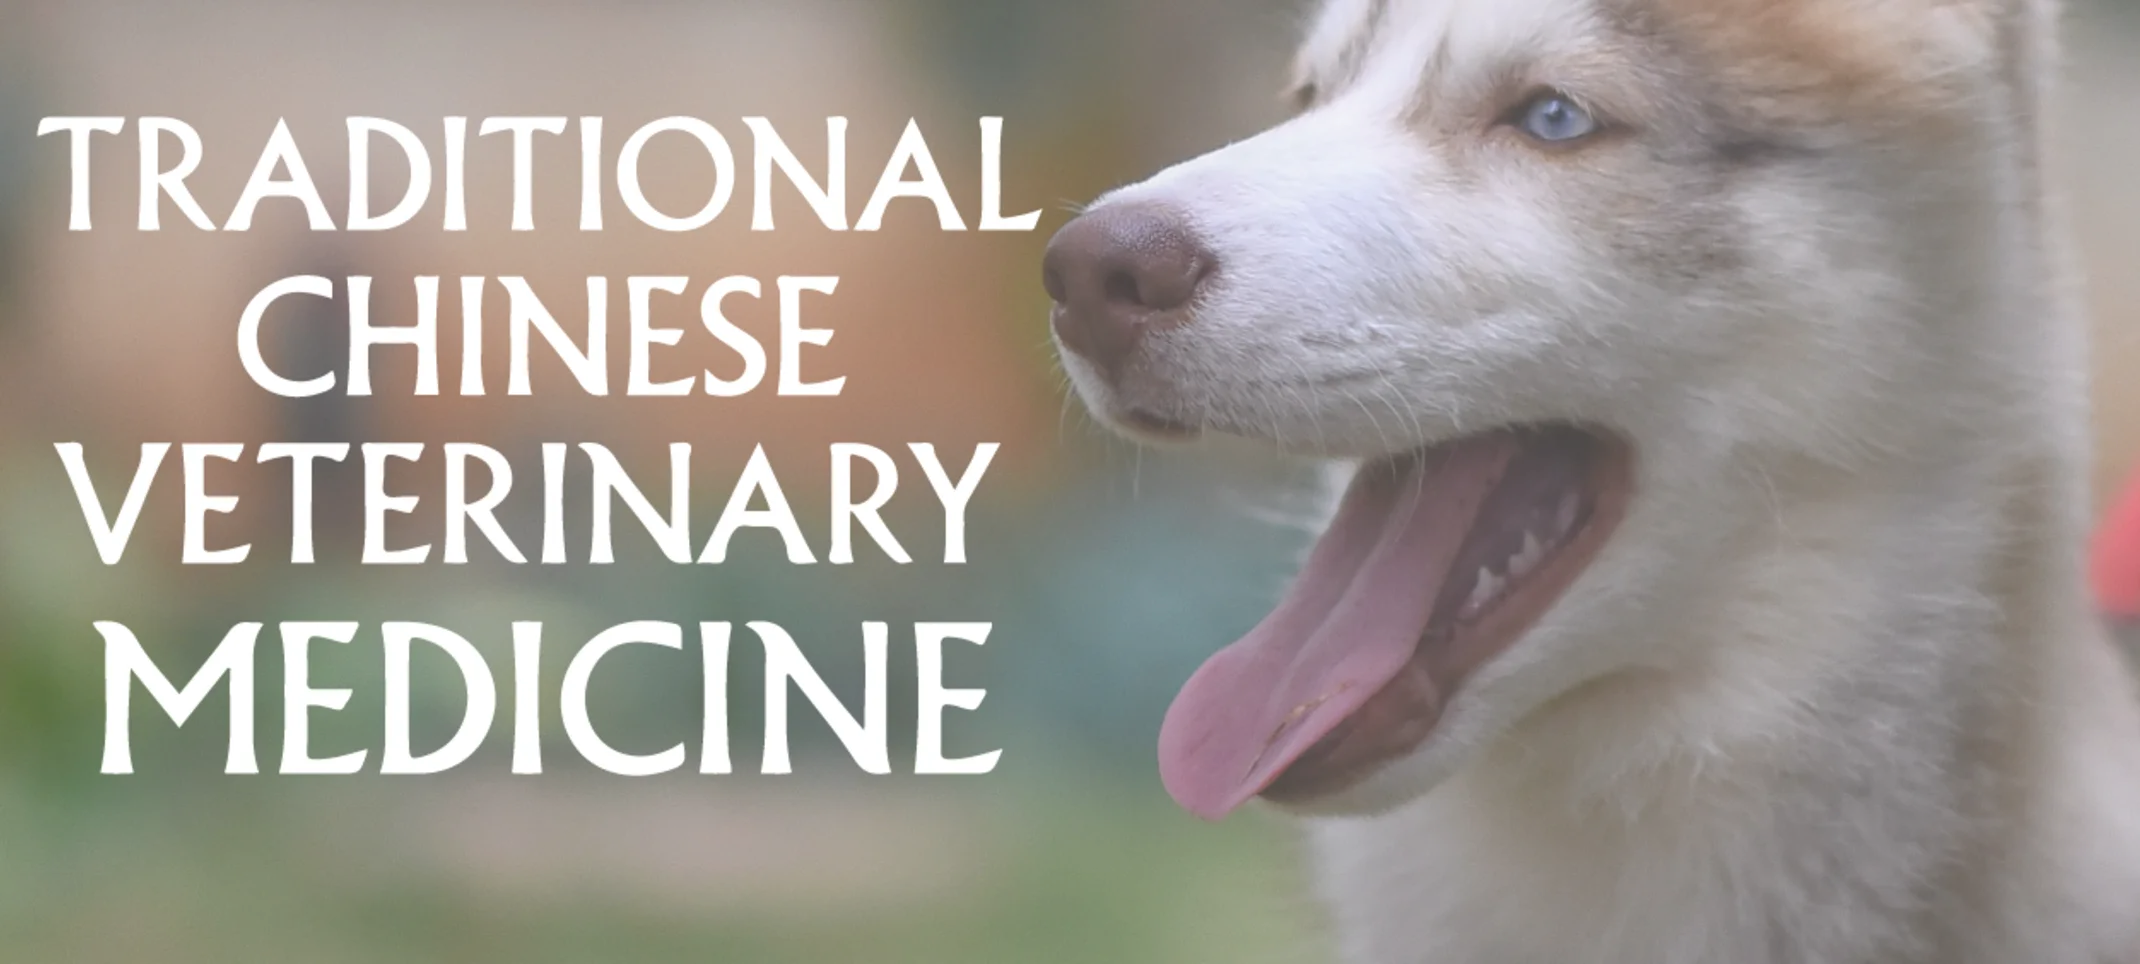 traditional chinese veterinary medicine 